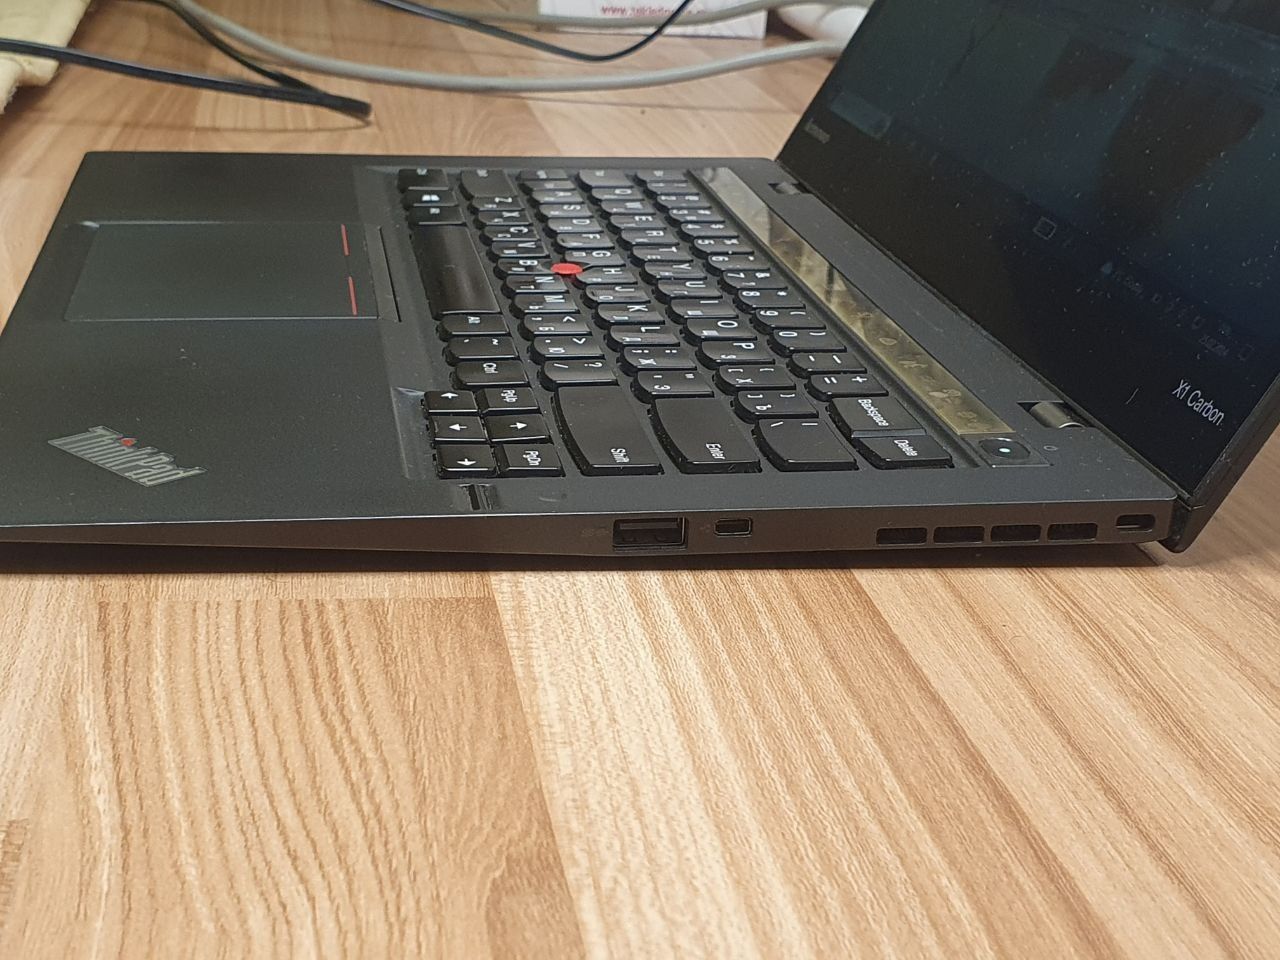 Мощный ультрабук Lenovo ThinkPad X1 Carbon, intel Core i7, сенсорный